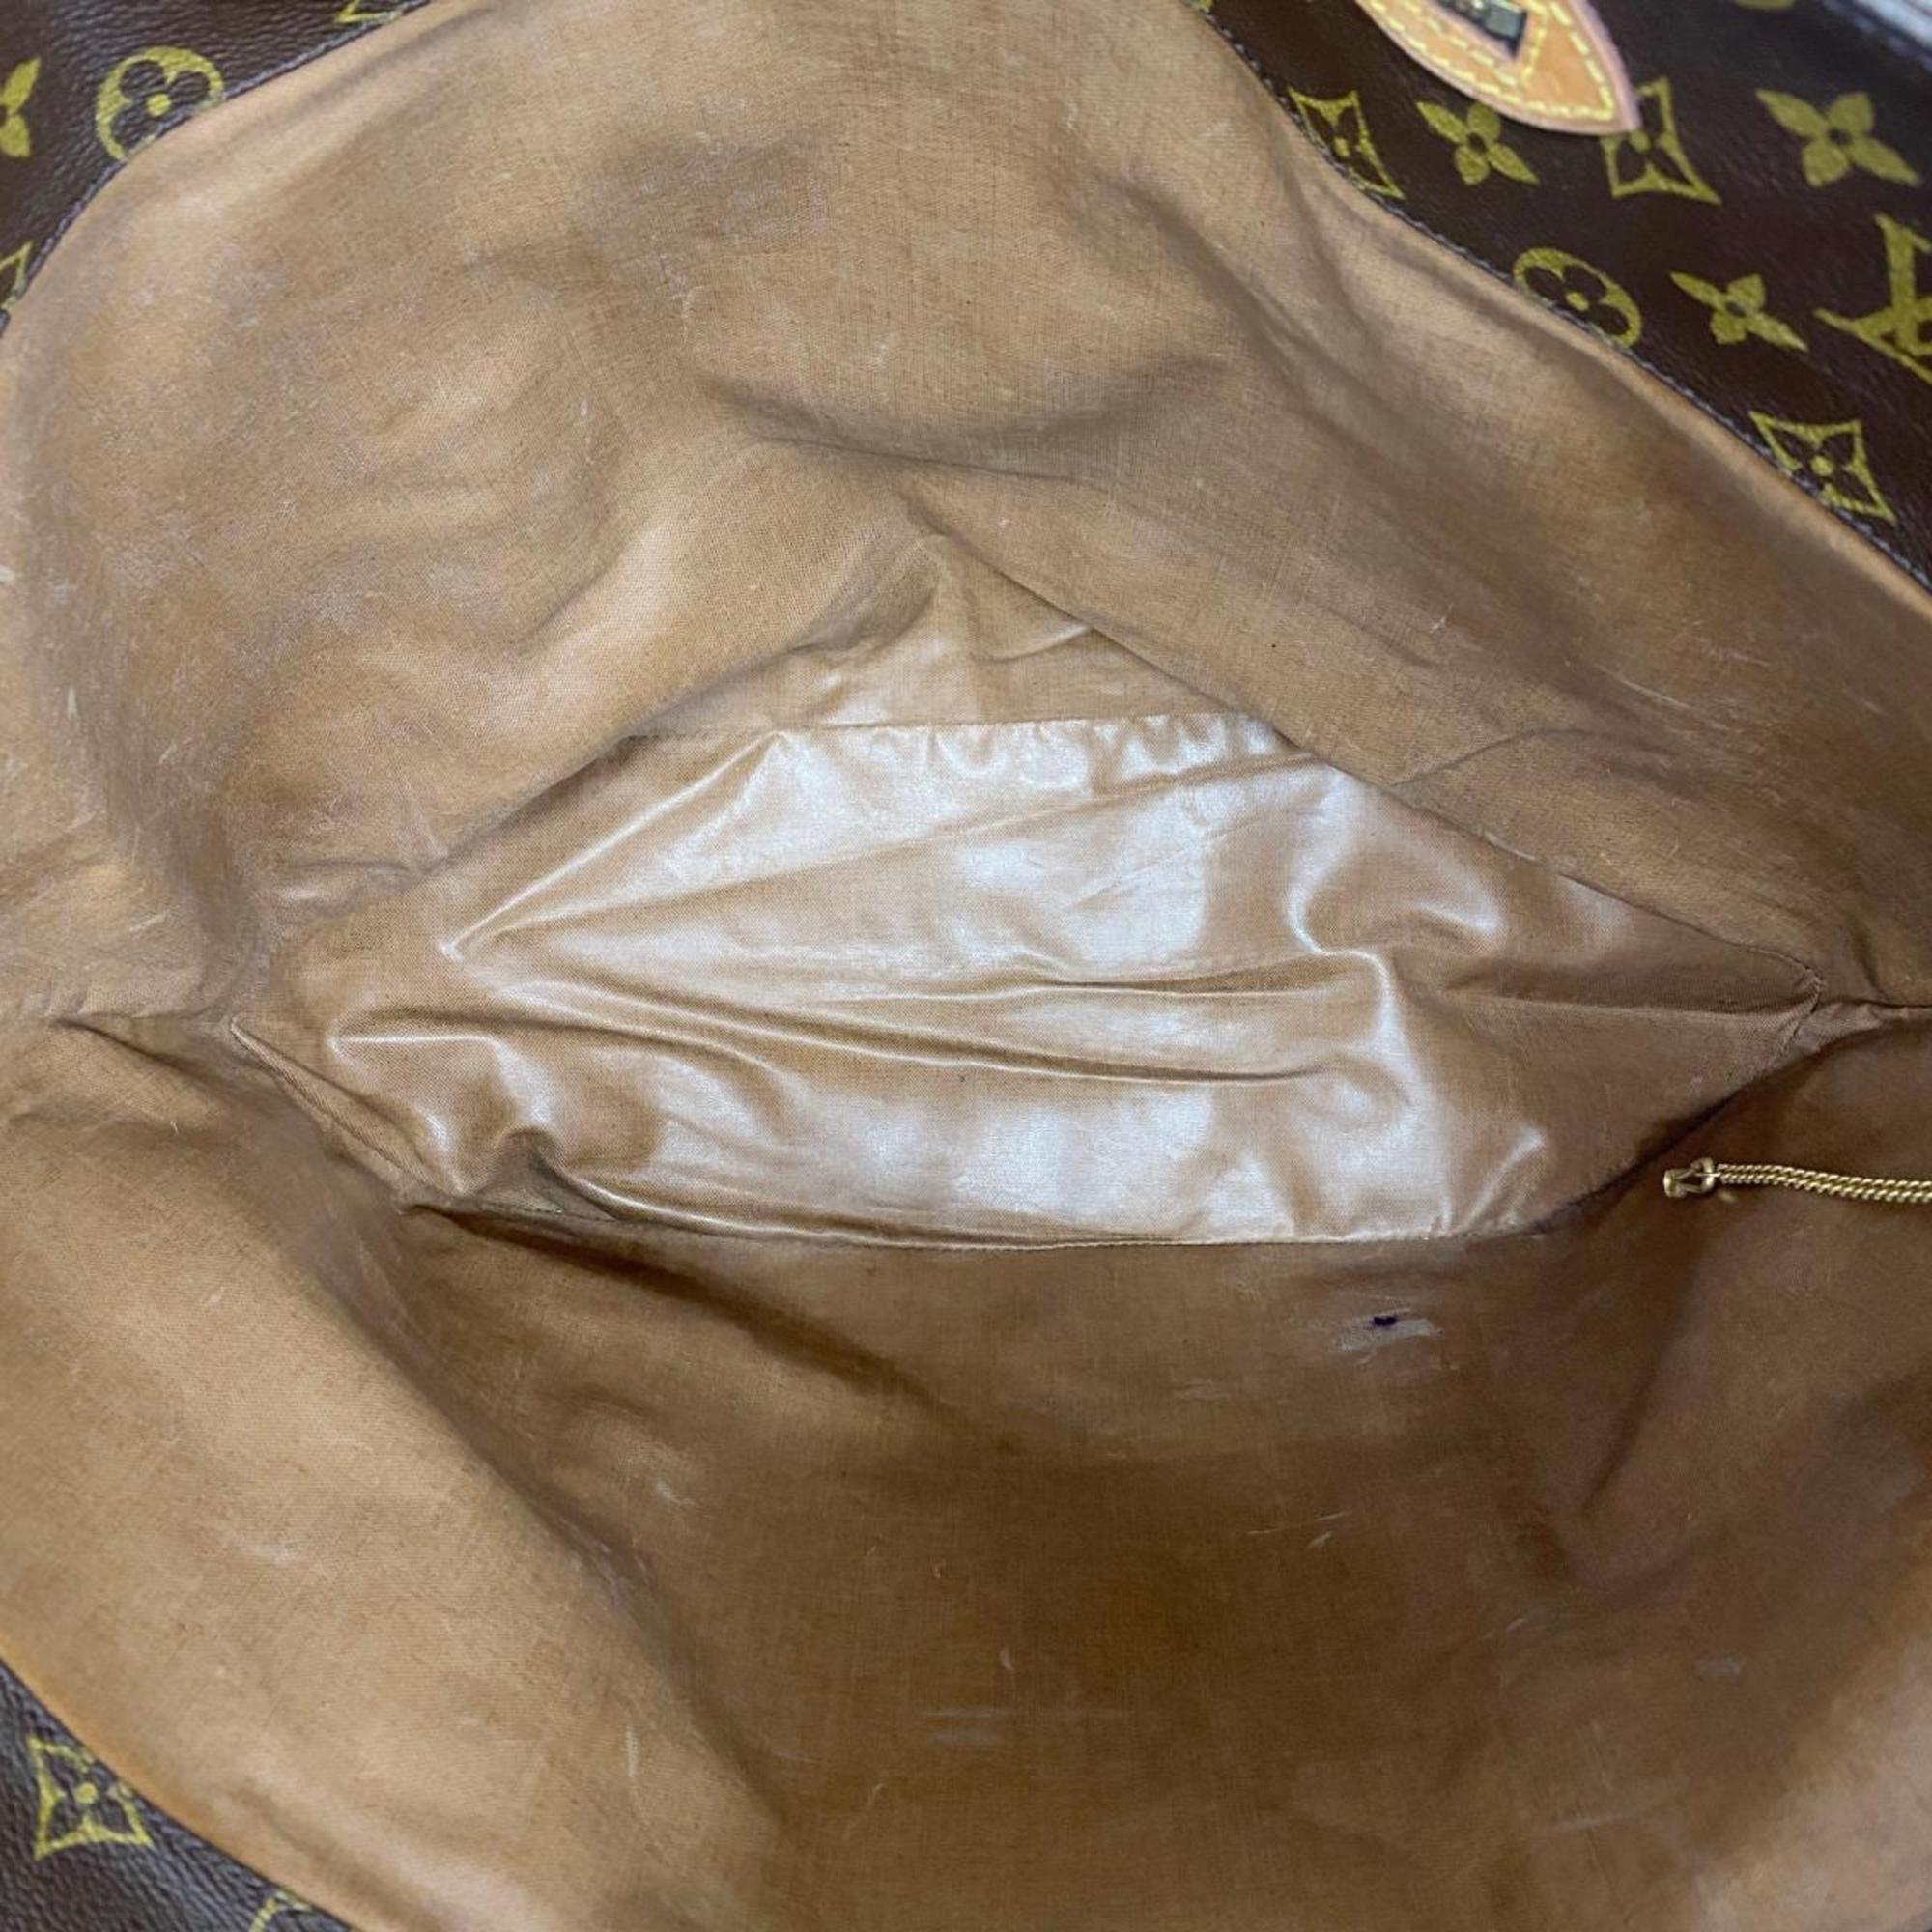 Louis Vuitton Tote Bag Monogram Saint Jacques GM M51110 Brown Women's